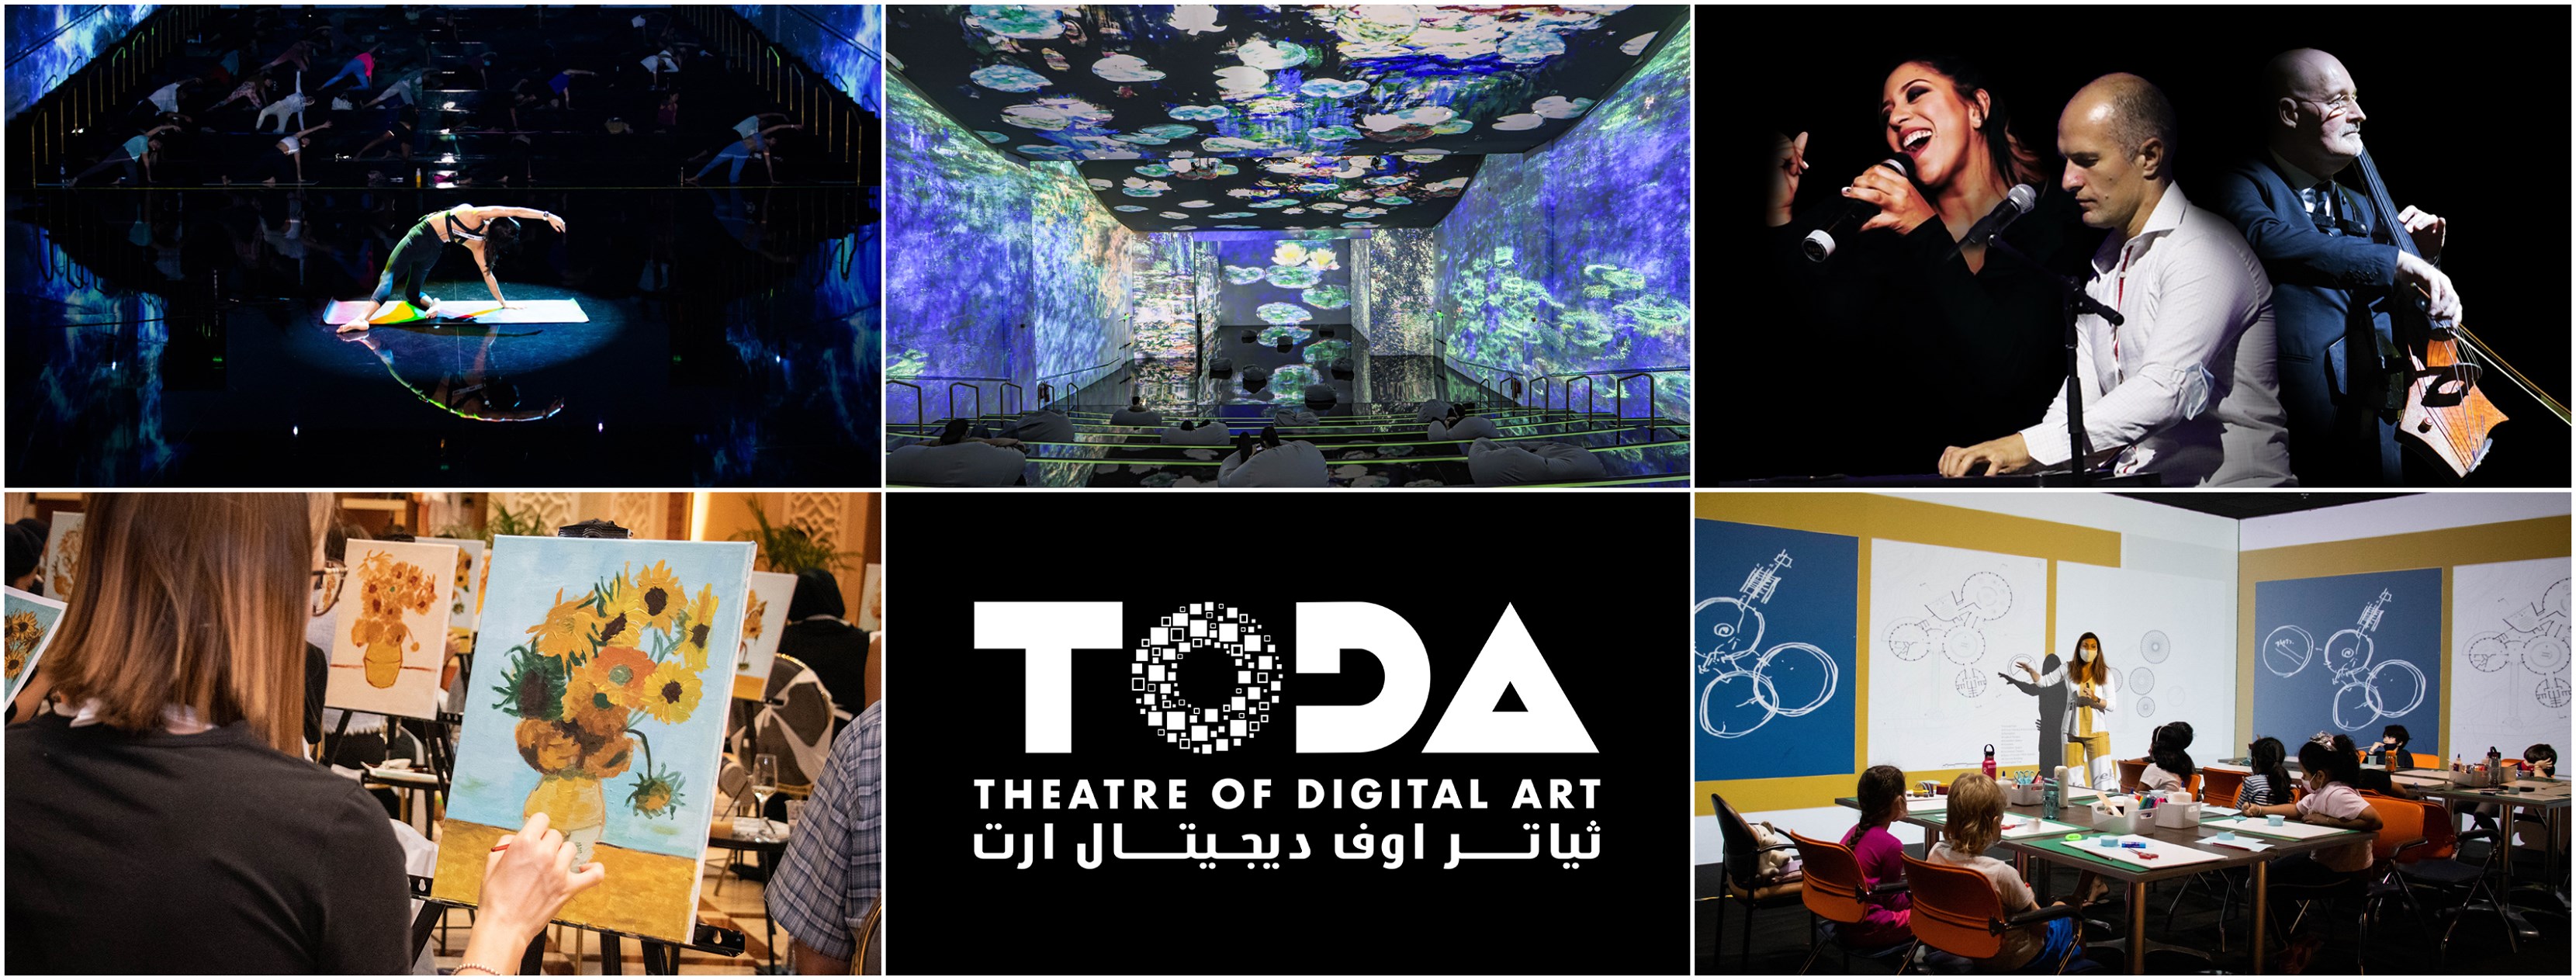 Theatre Of Digital Art Dubai